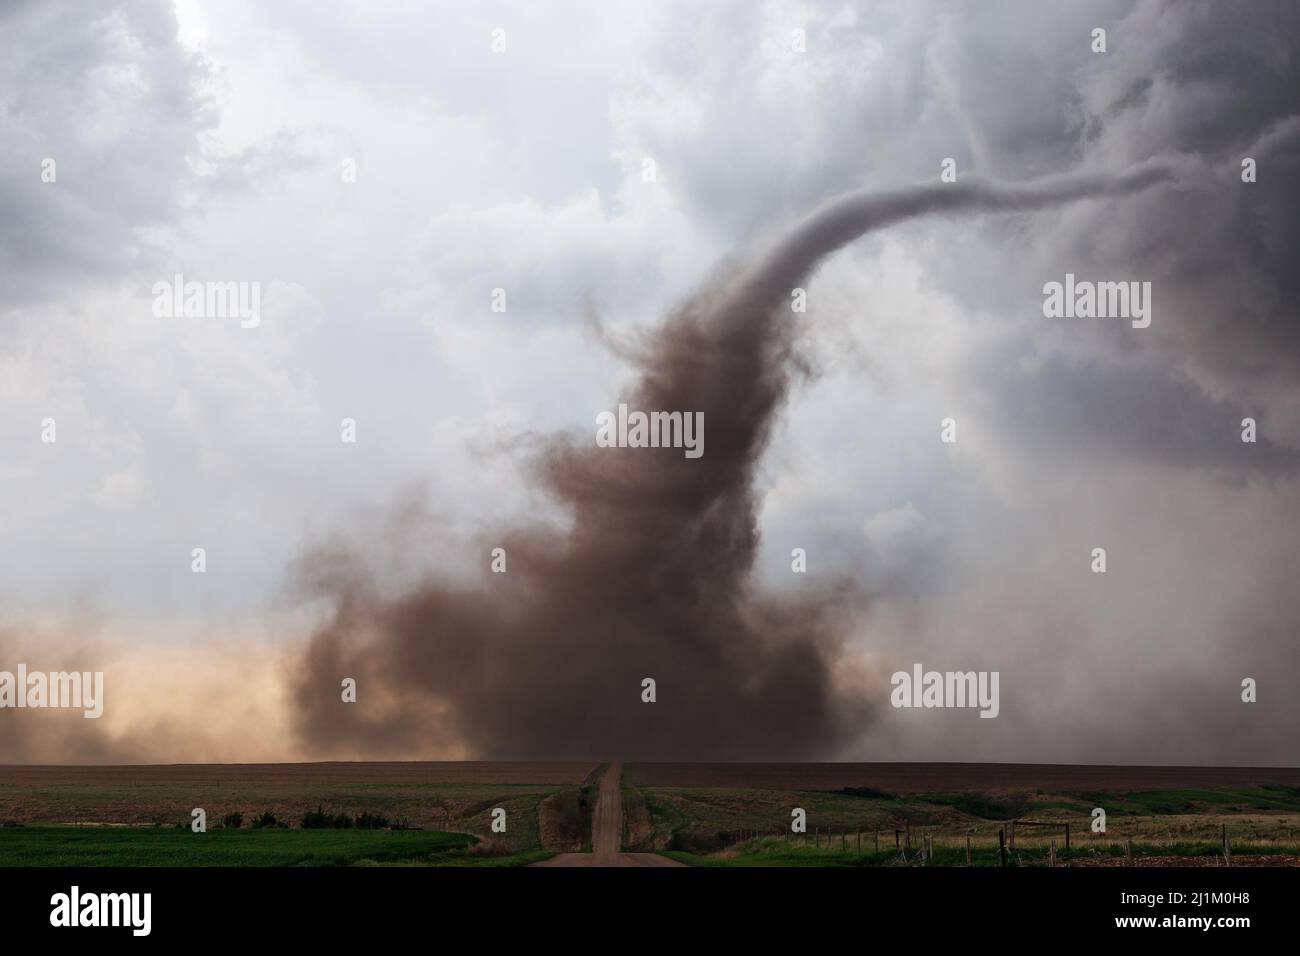 Tornado funnel approaching from a storm near McCook, Nebraska, USA Stock Photo